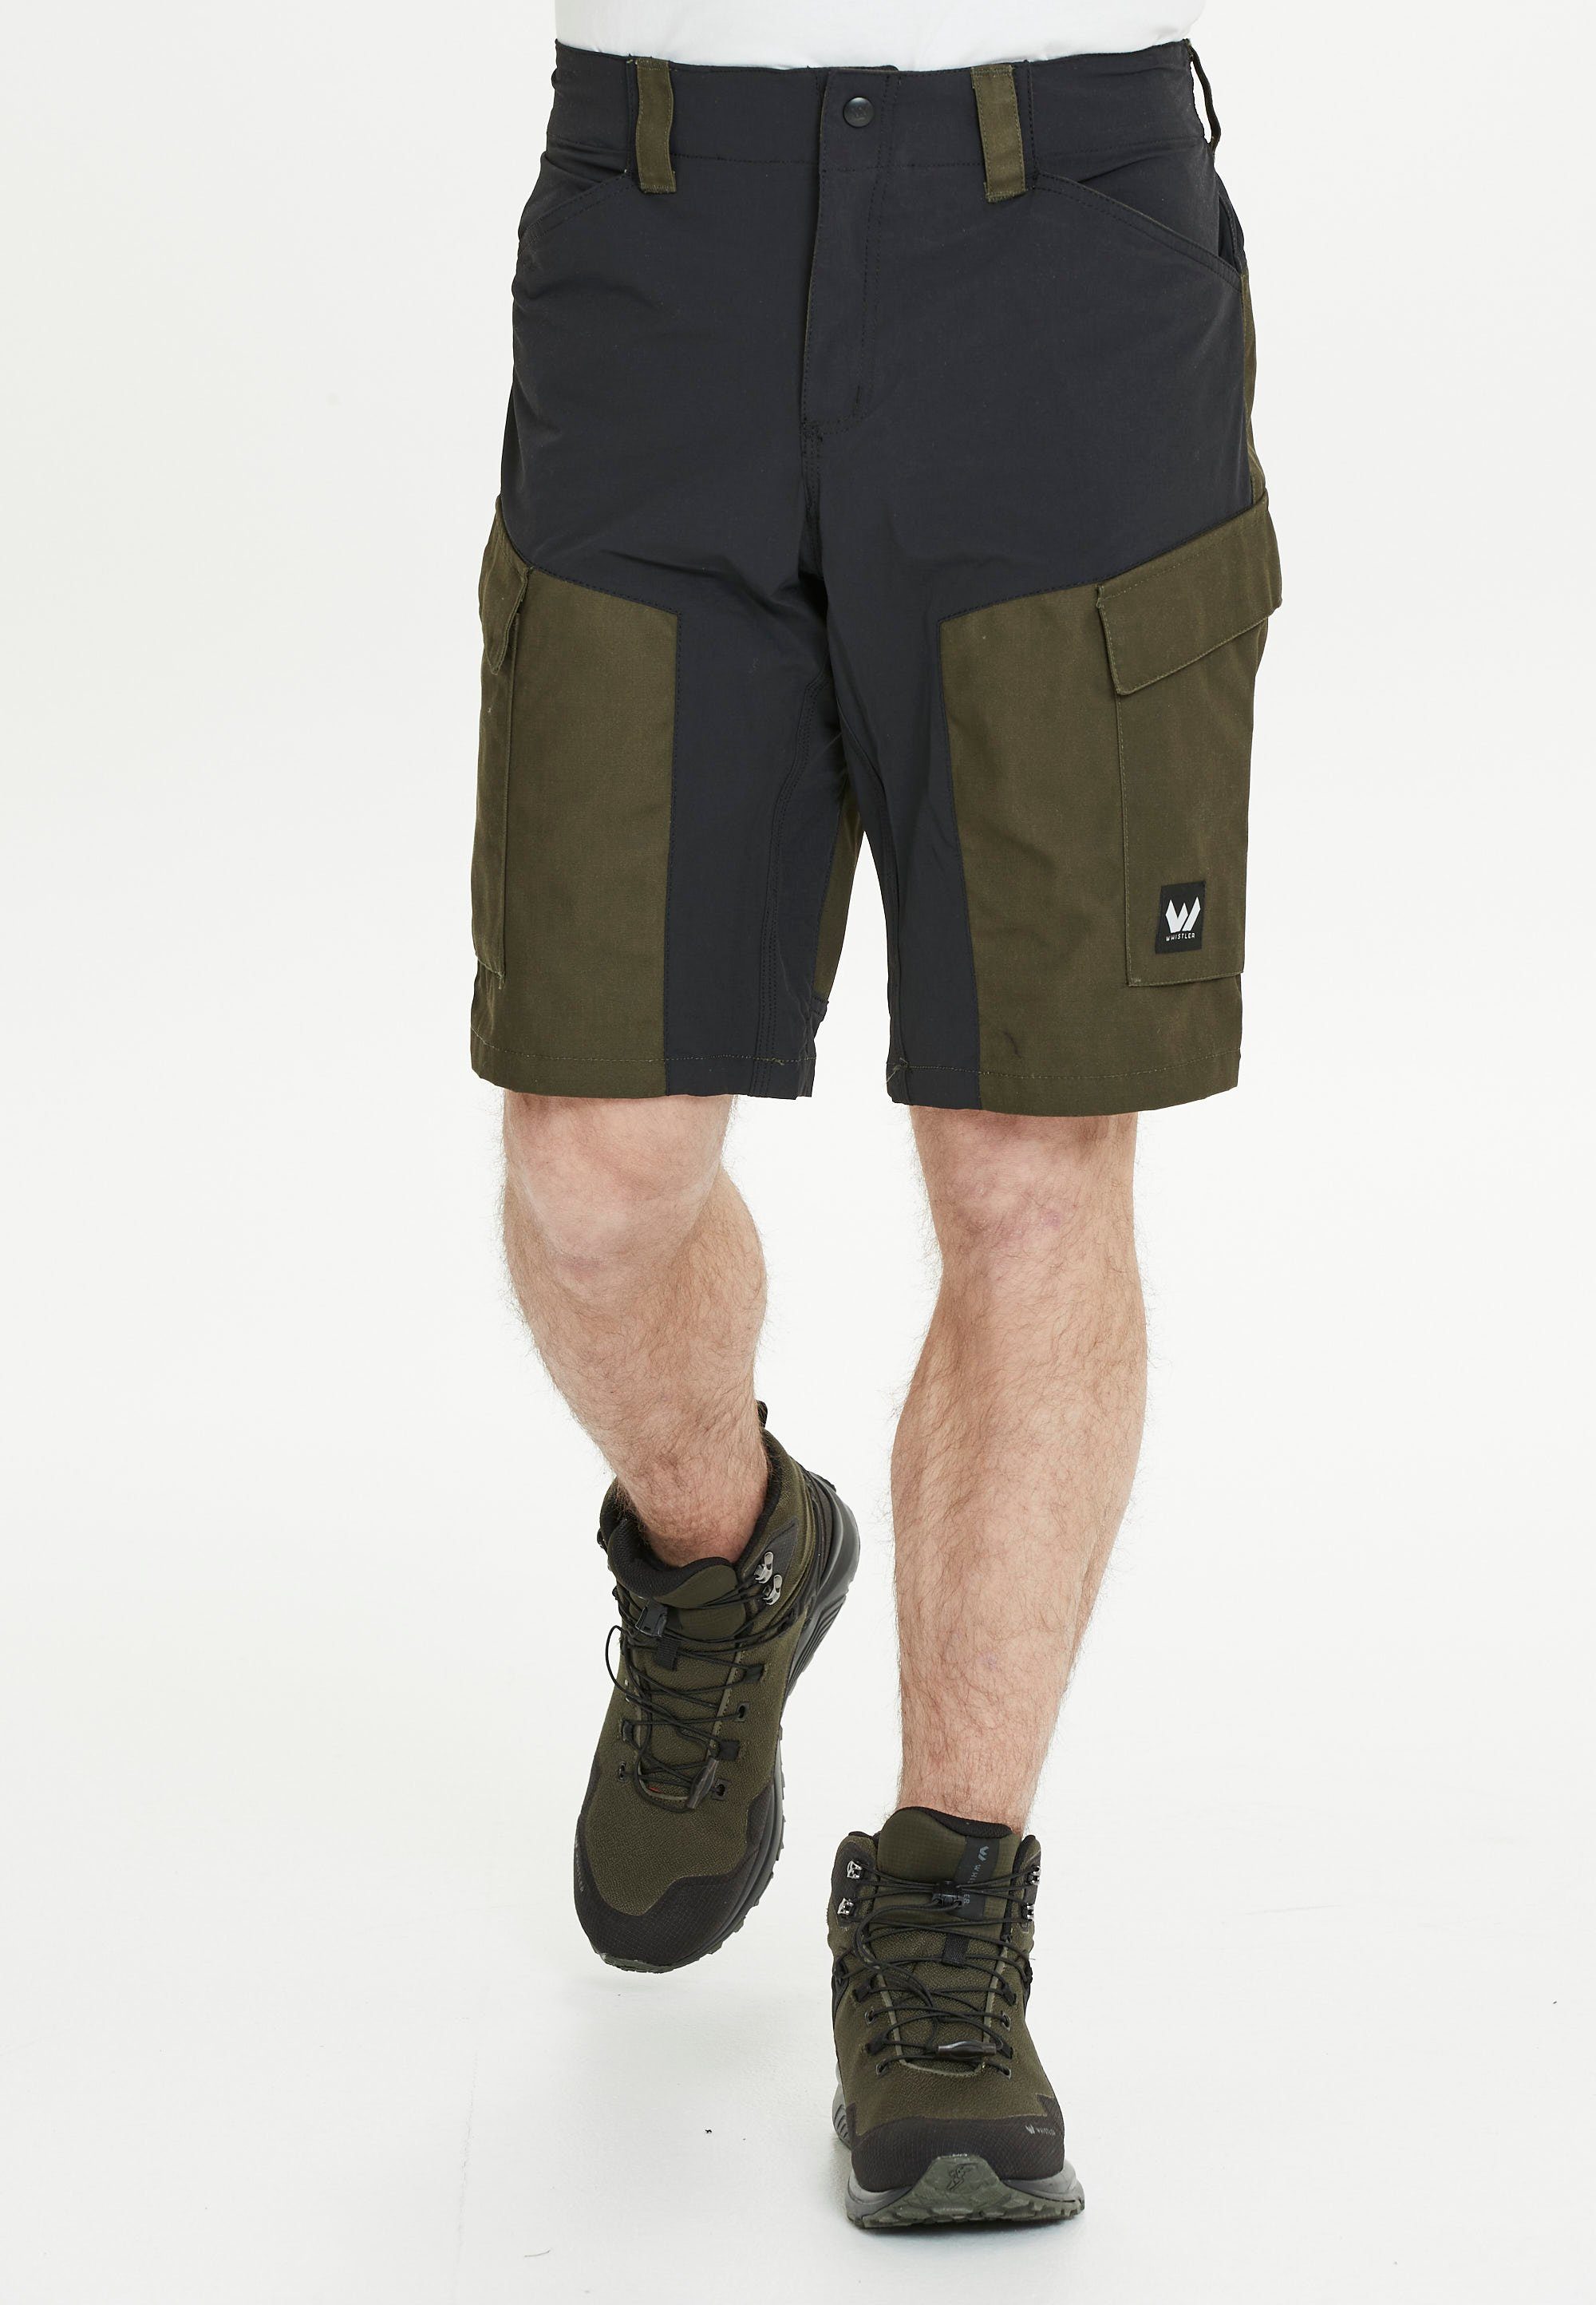 WHISTLER Shorts ROMMY mit atmungsaktivem Materialmix dunkelgrün-schwarz